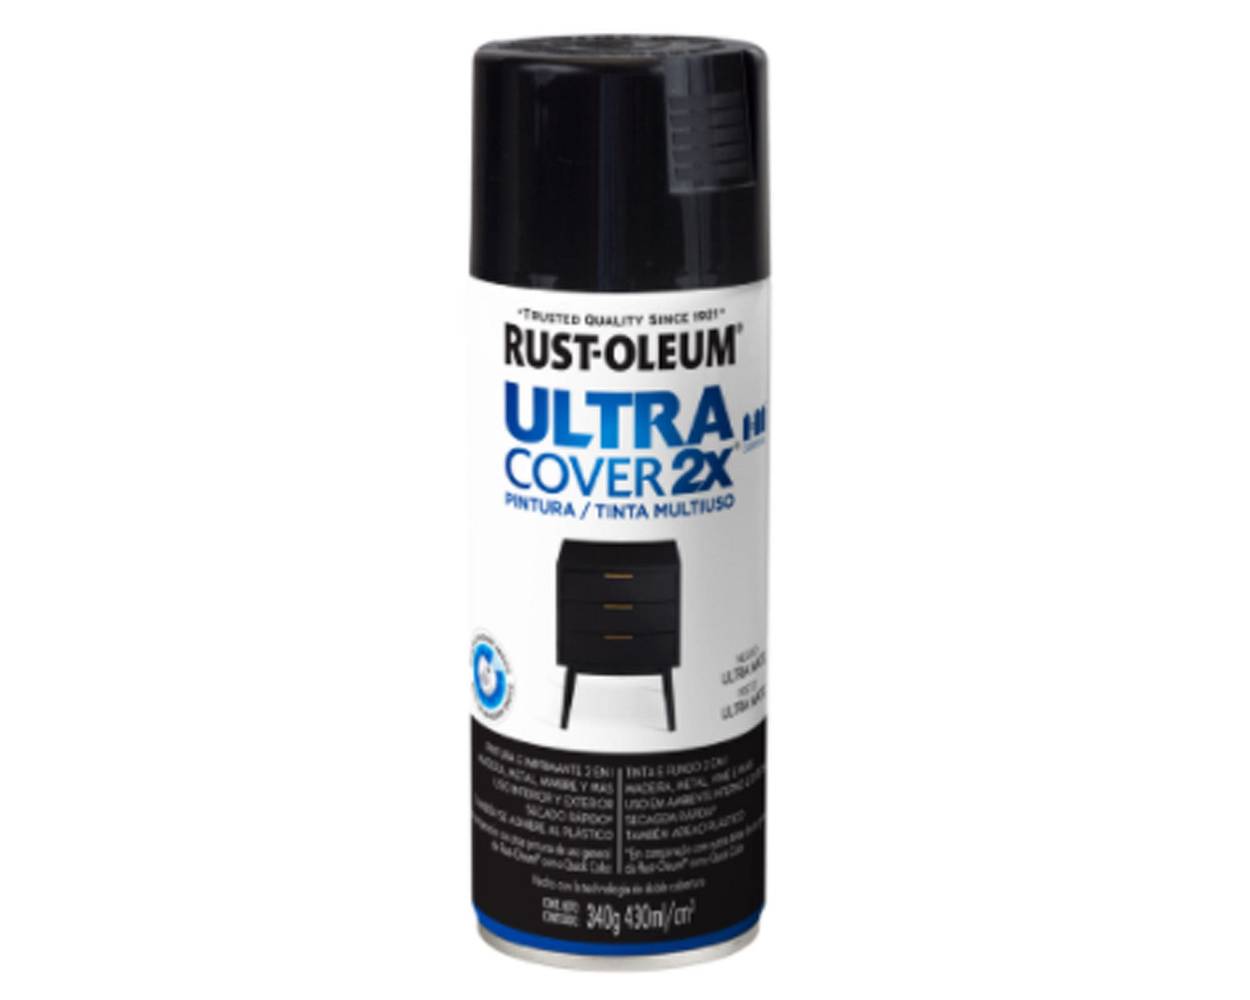 Rust oleum pintura spray ultra cover 2x negro brillante (lata 430 g)